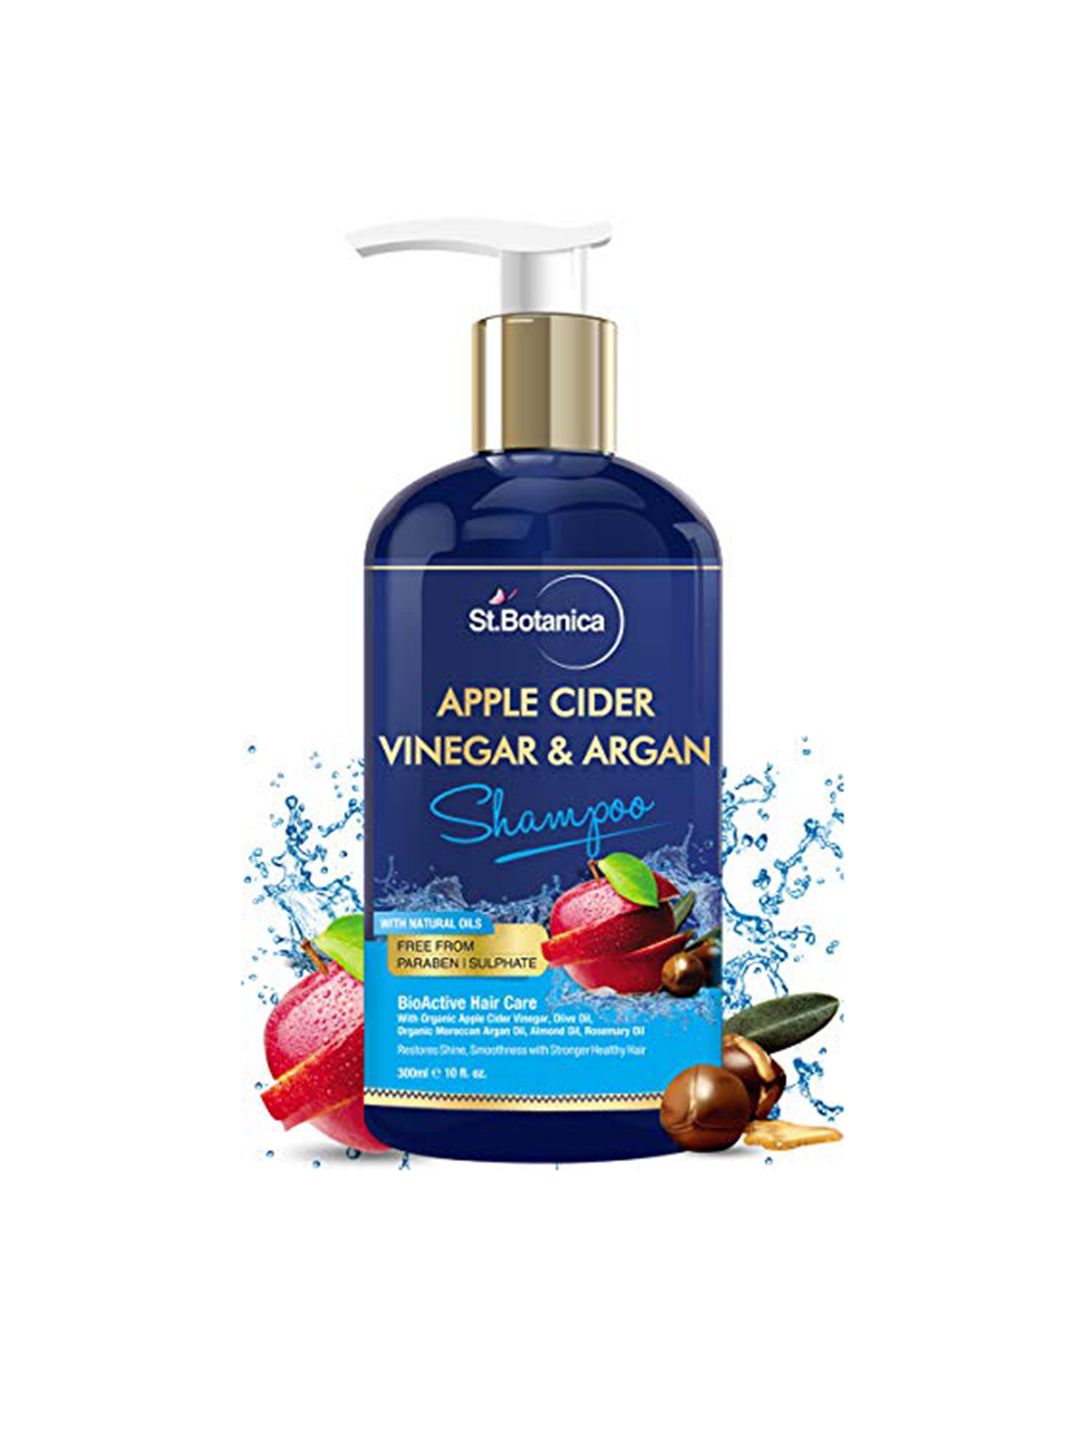 St.Botanica Apple Cider Vinegar & Argan Shampoo, 300 ml Price in India